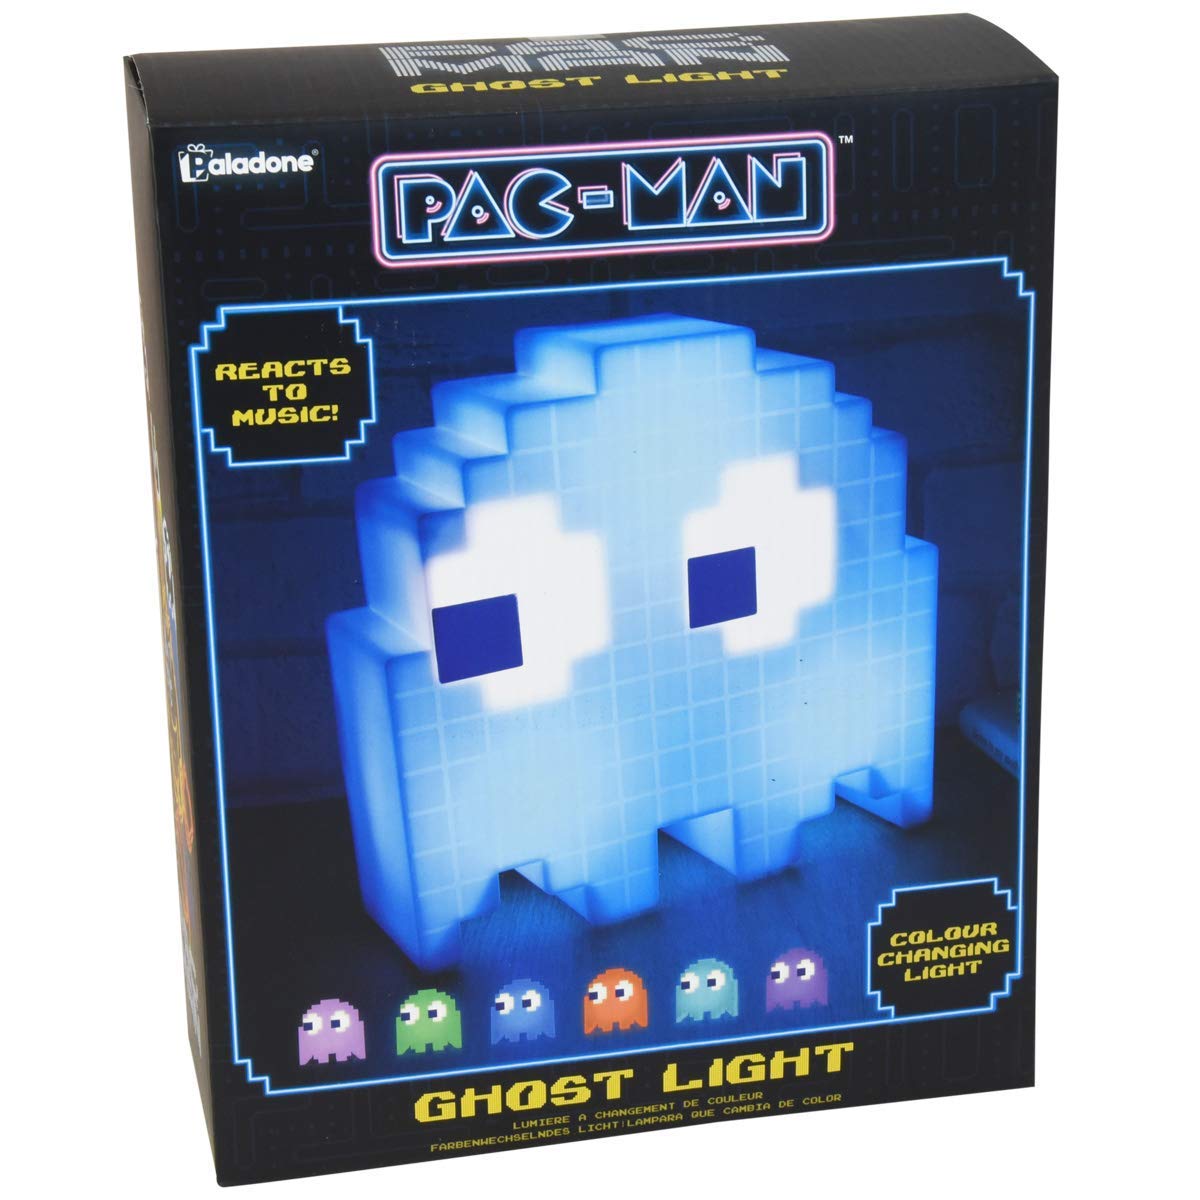 Pac Man Ghost Light - oddgifts.com